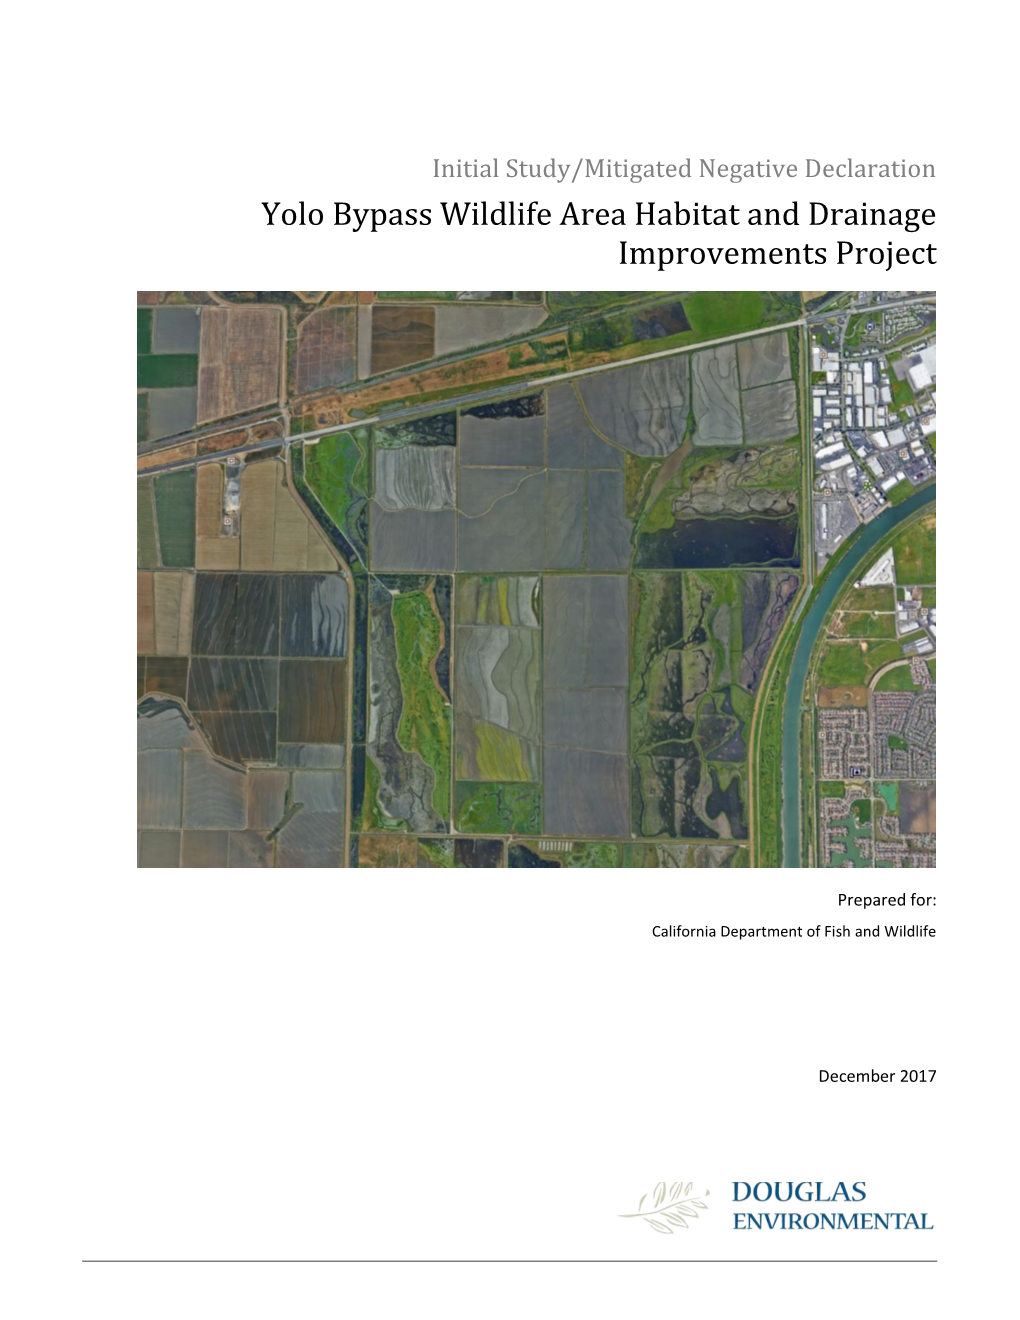 Yolo Bypass Wildlife Area Habitat and Drainage Improvements Project